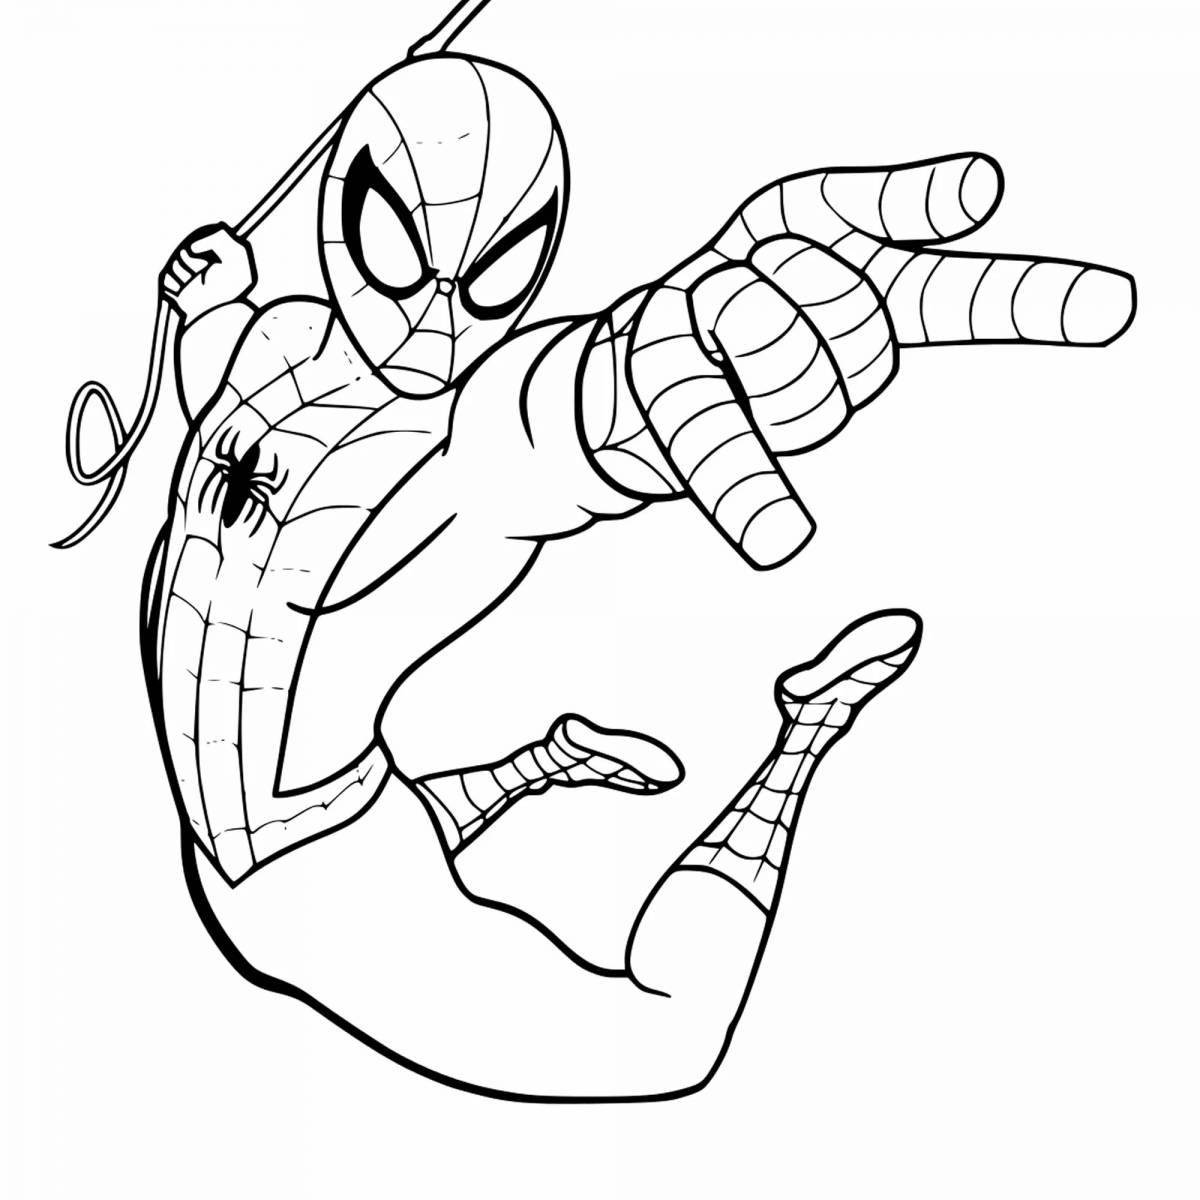 Marvel regal spider-man coloring page